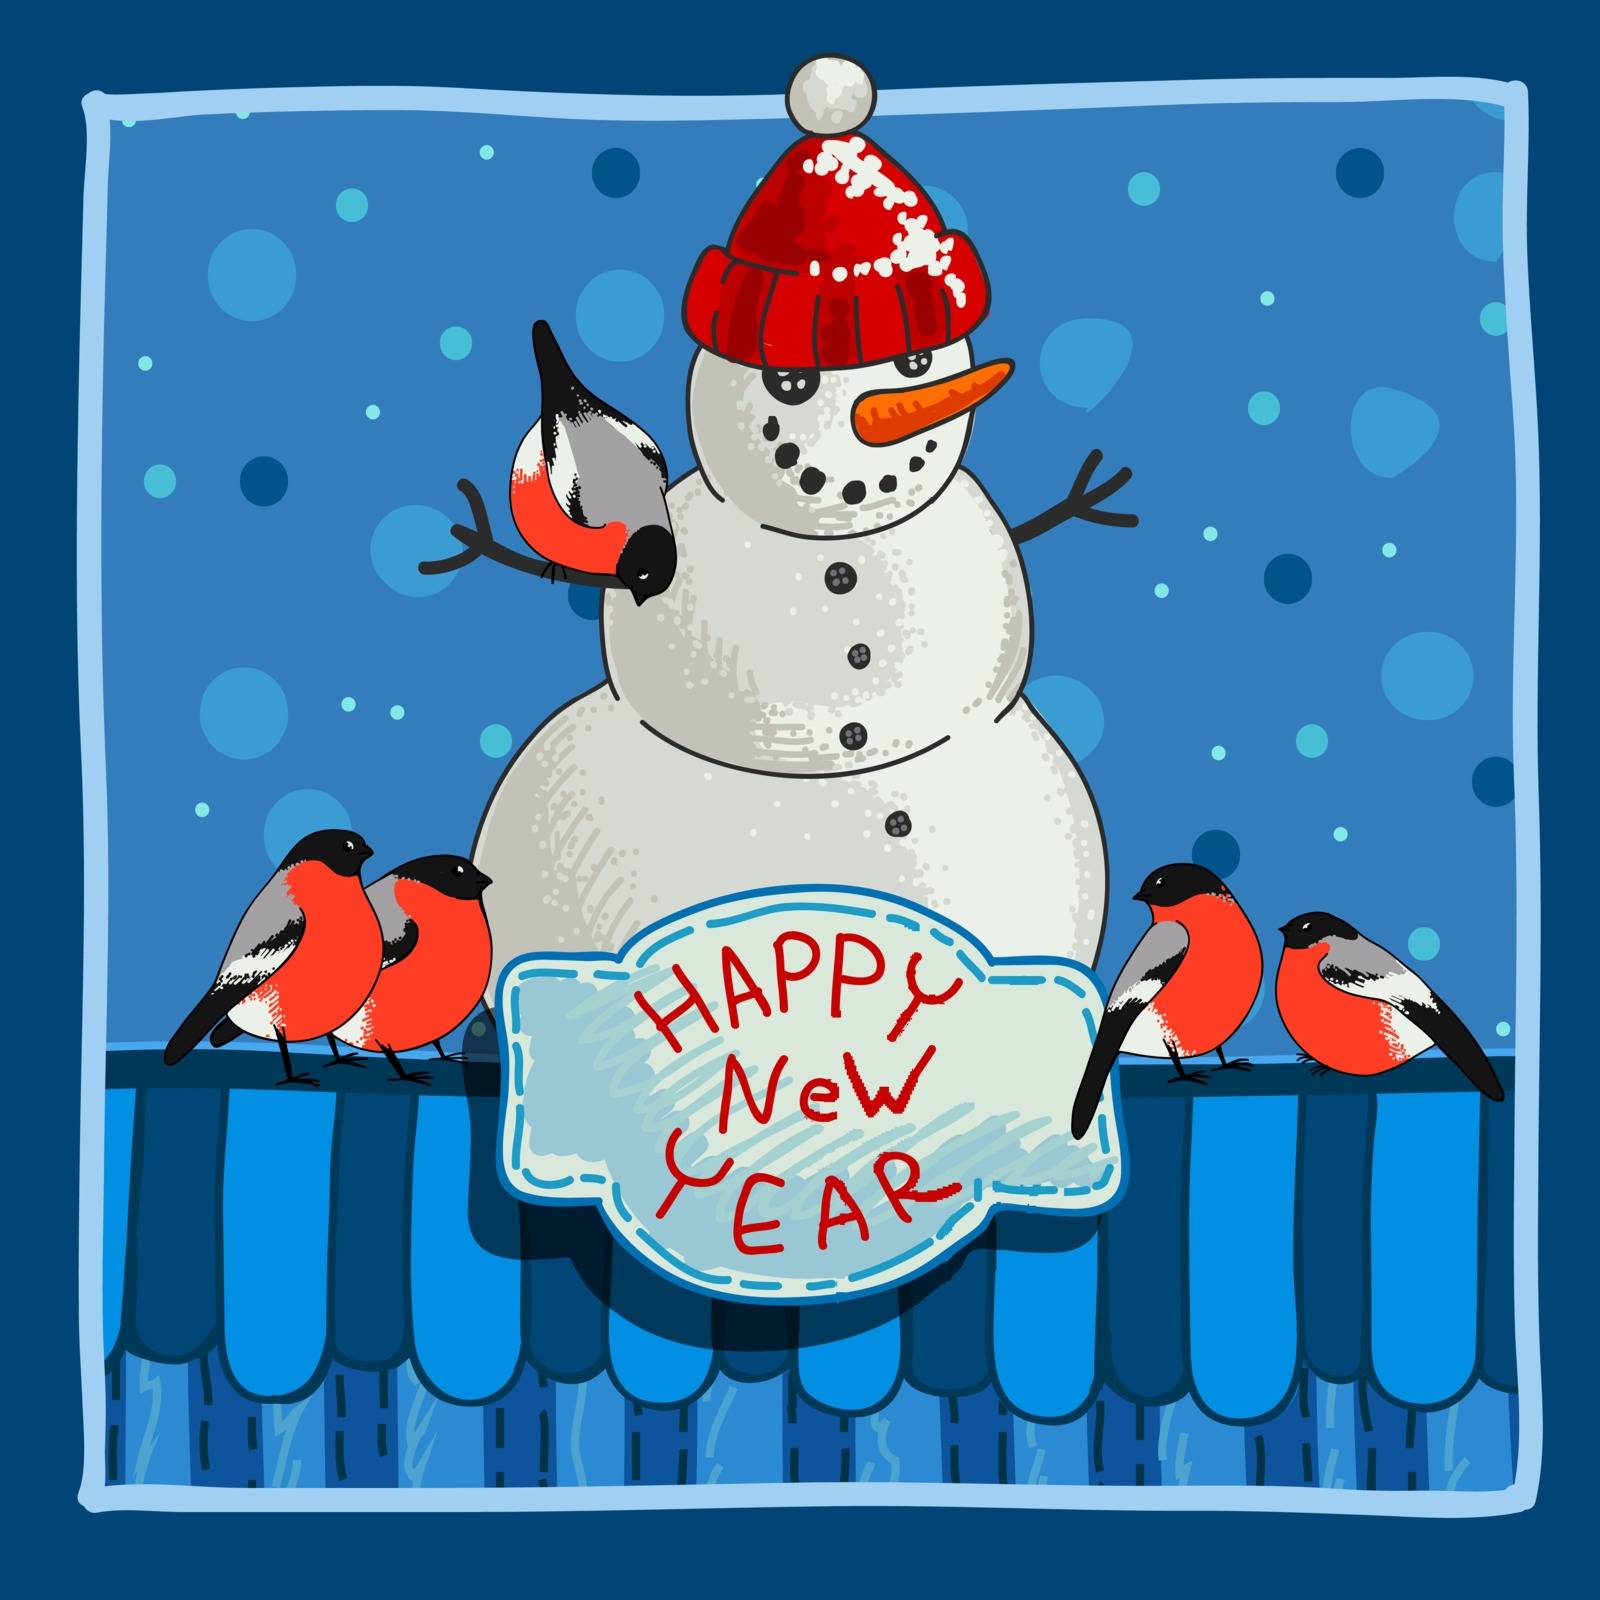 Design a Christmas card with a snowman, birds and congratulations